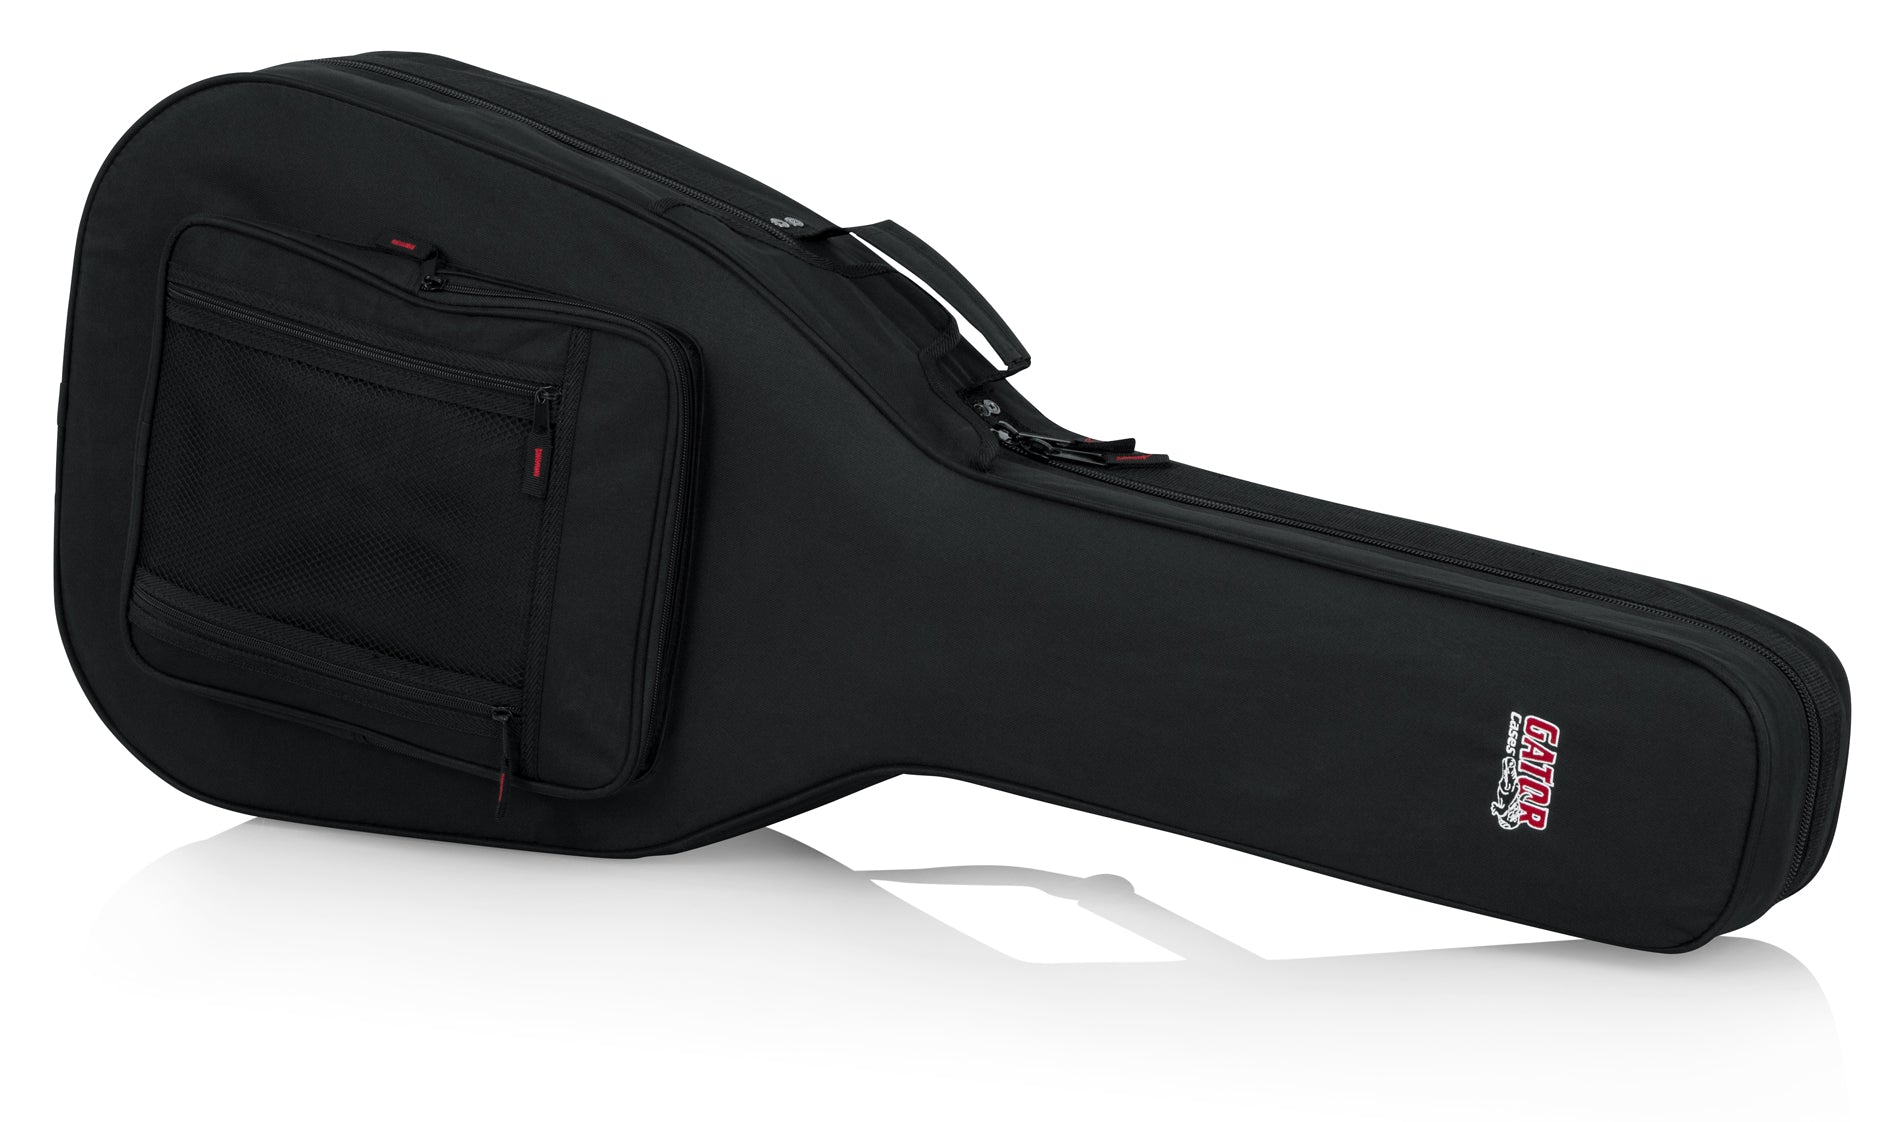 Gator GL APX Style Lightweight Guitar case